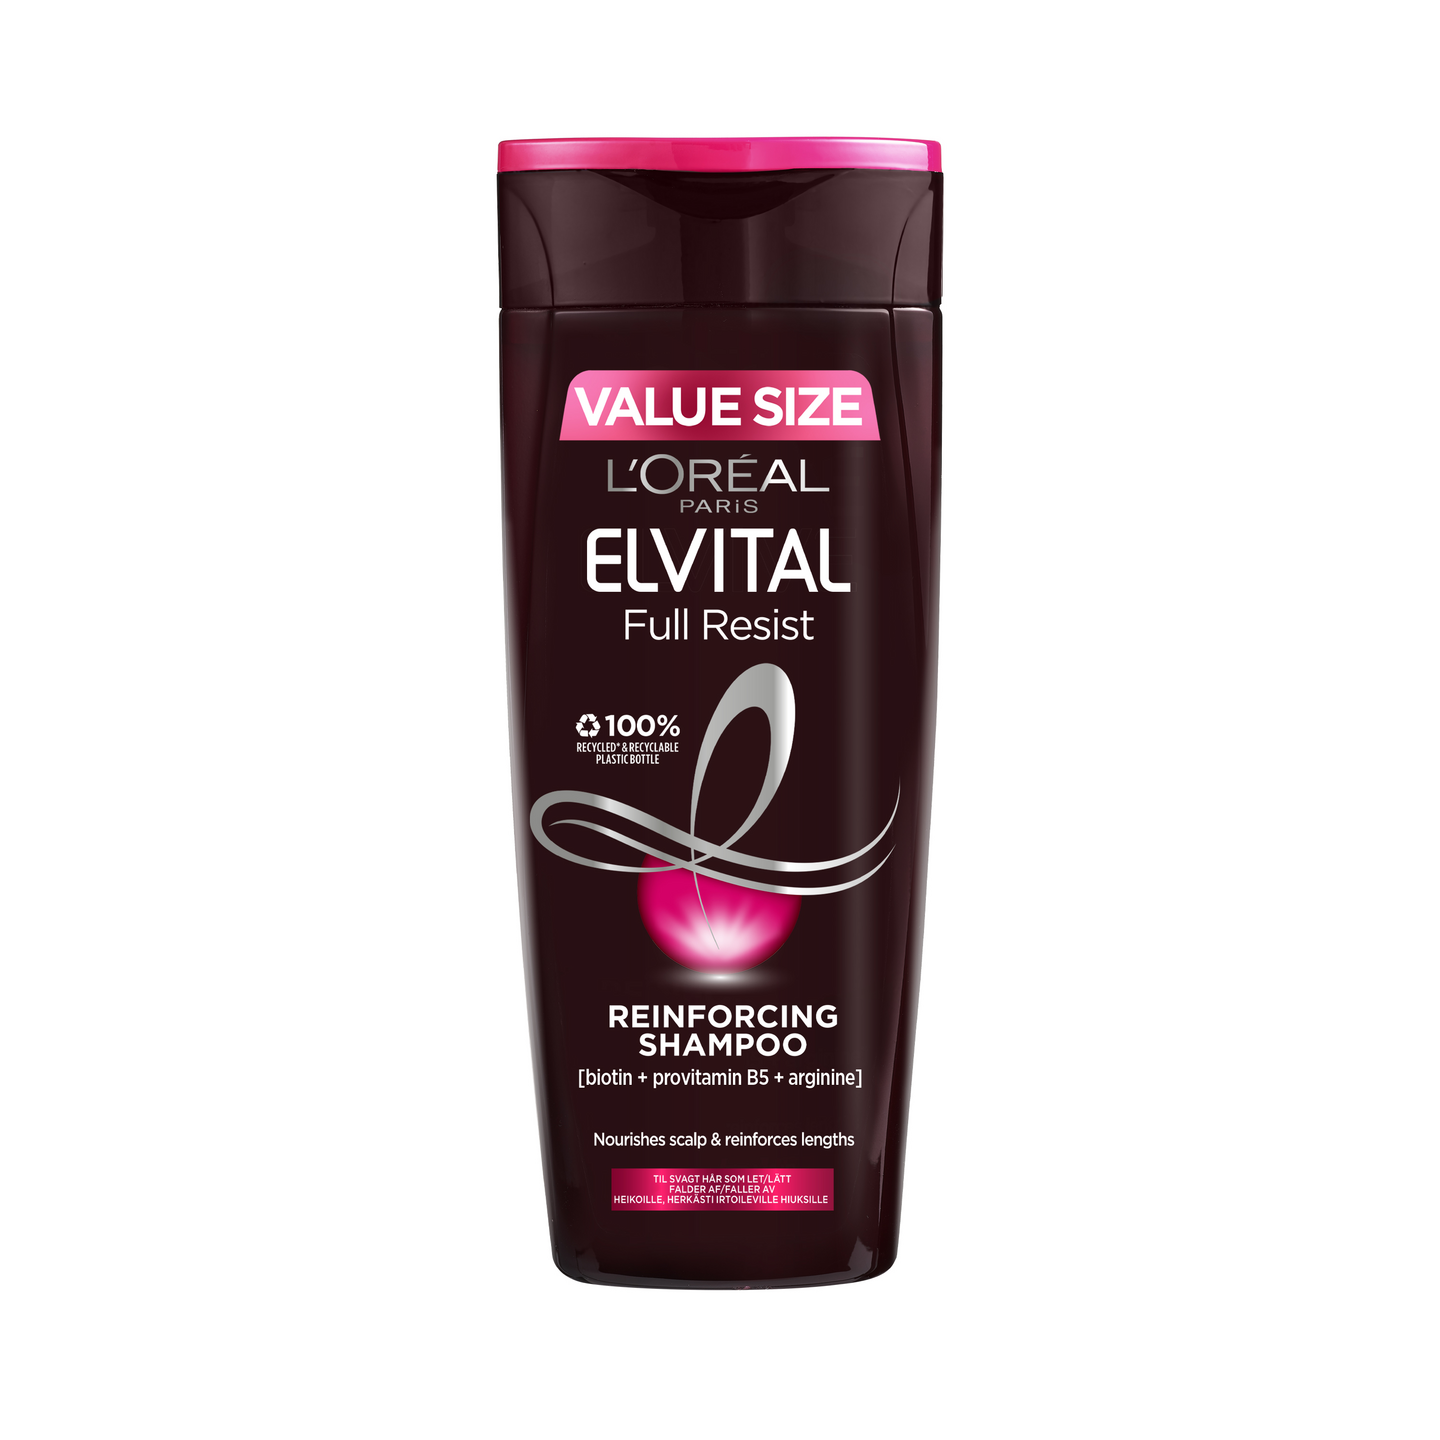 L'Oréal Paris Elvital shampoo 400ml Full Resist